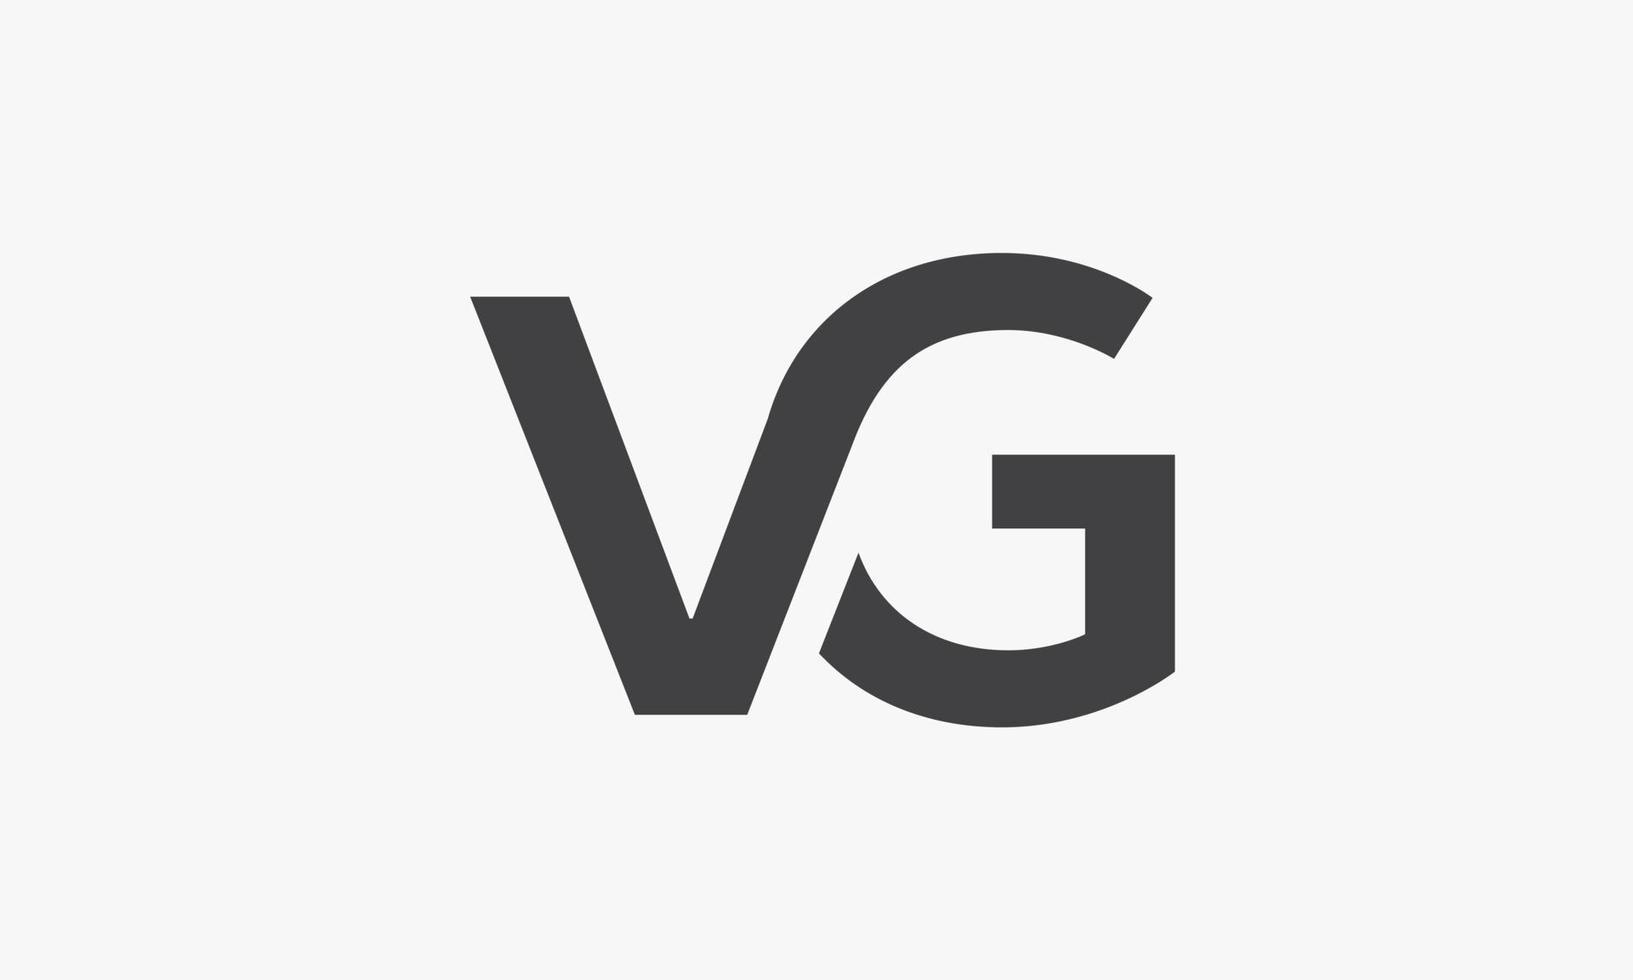 letter VG logo isolated on white background. vector